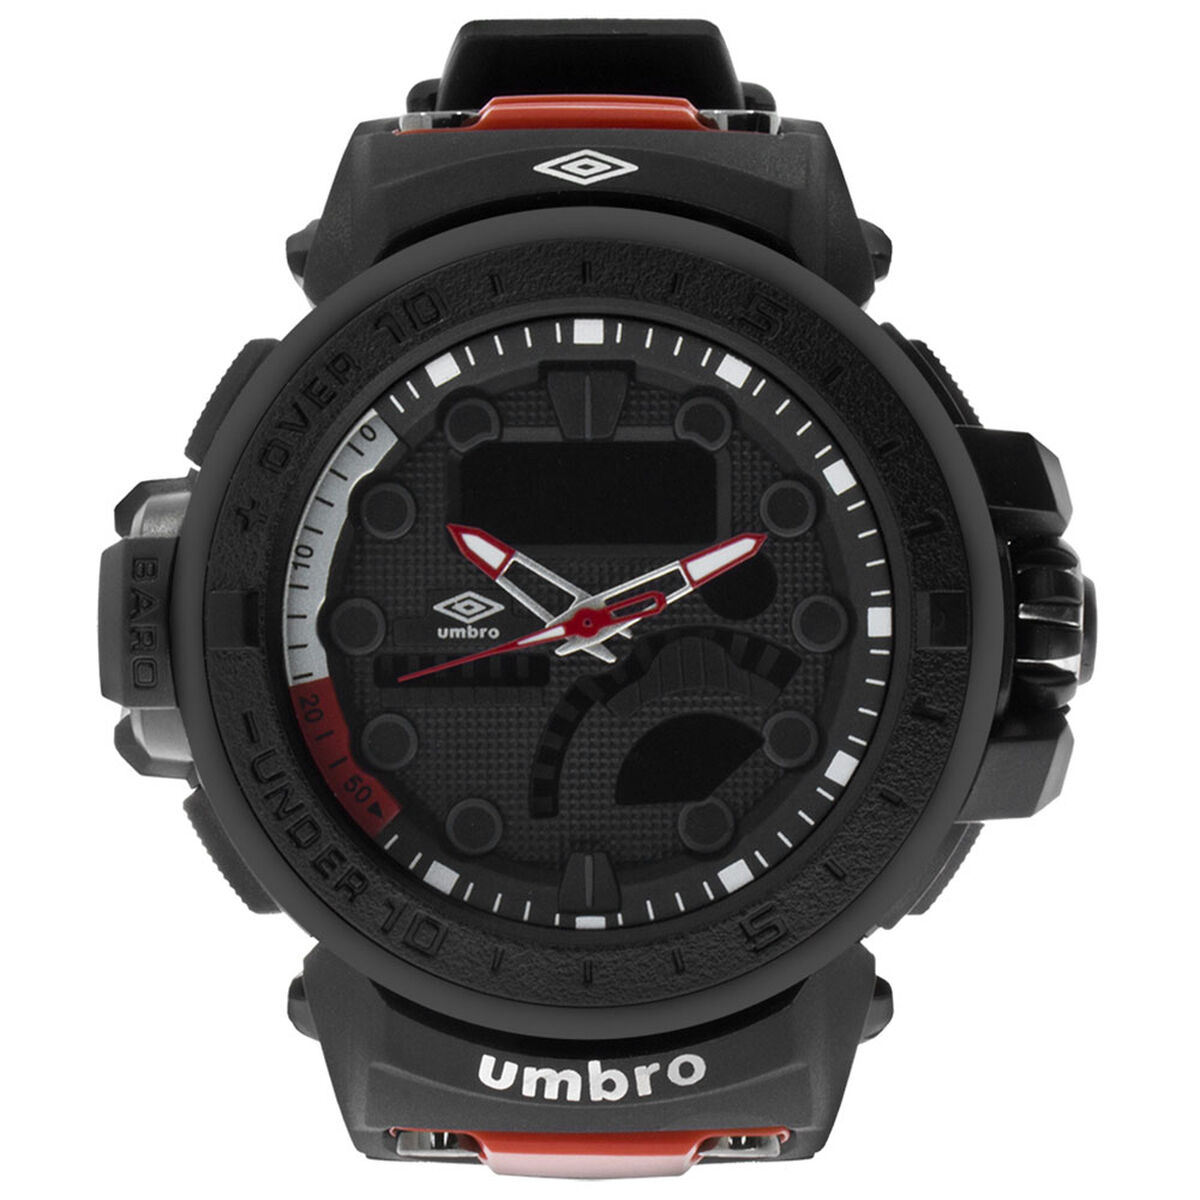 Reloj Digital UMBRO Modelo UMB-081-4